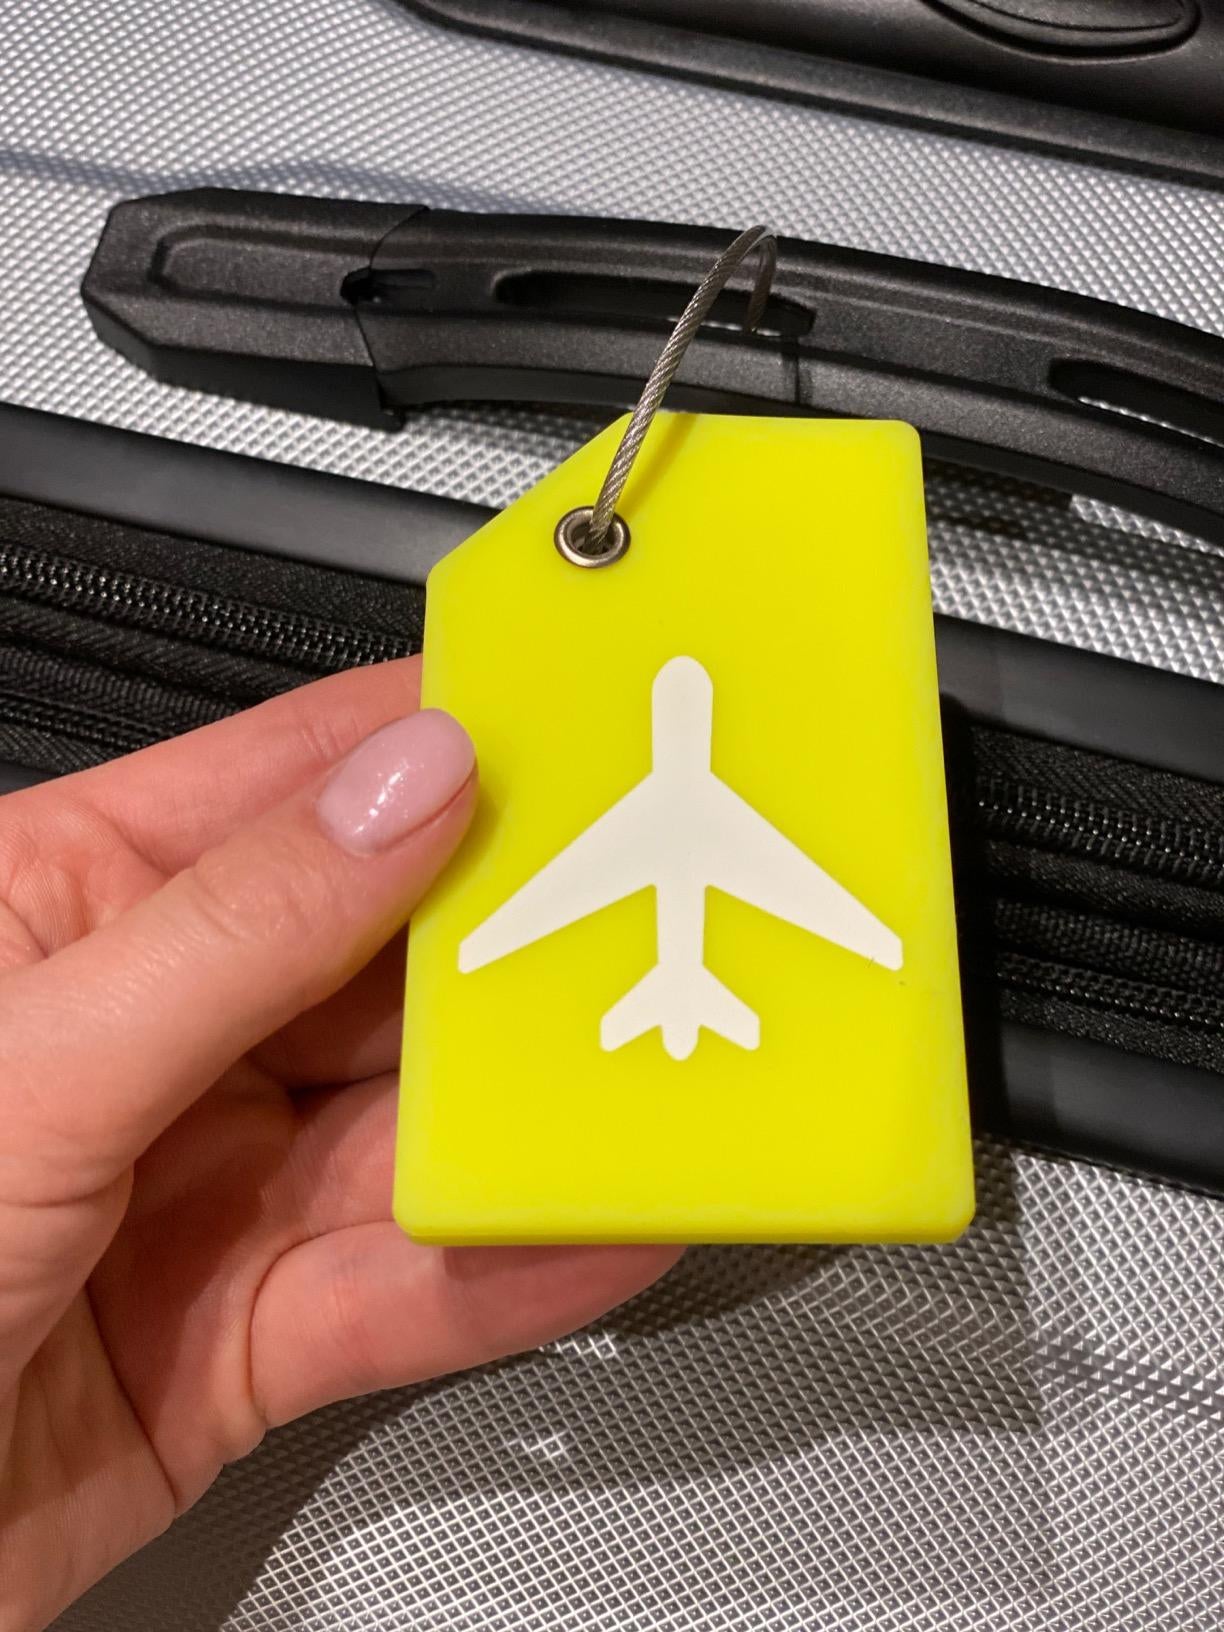  Corgi Dog British Luggage Tags Travel Bag Labels Tag